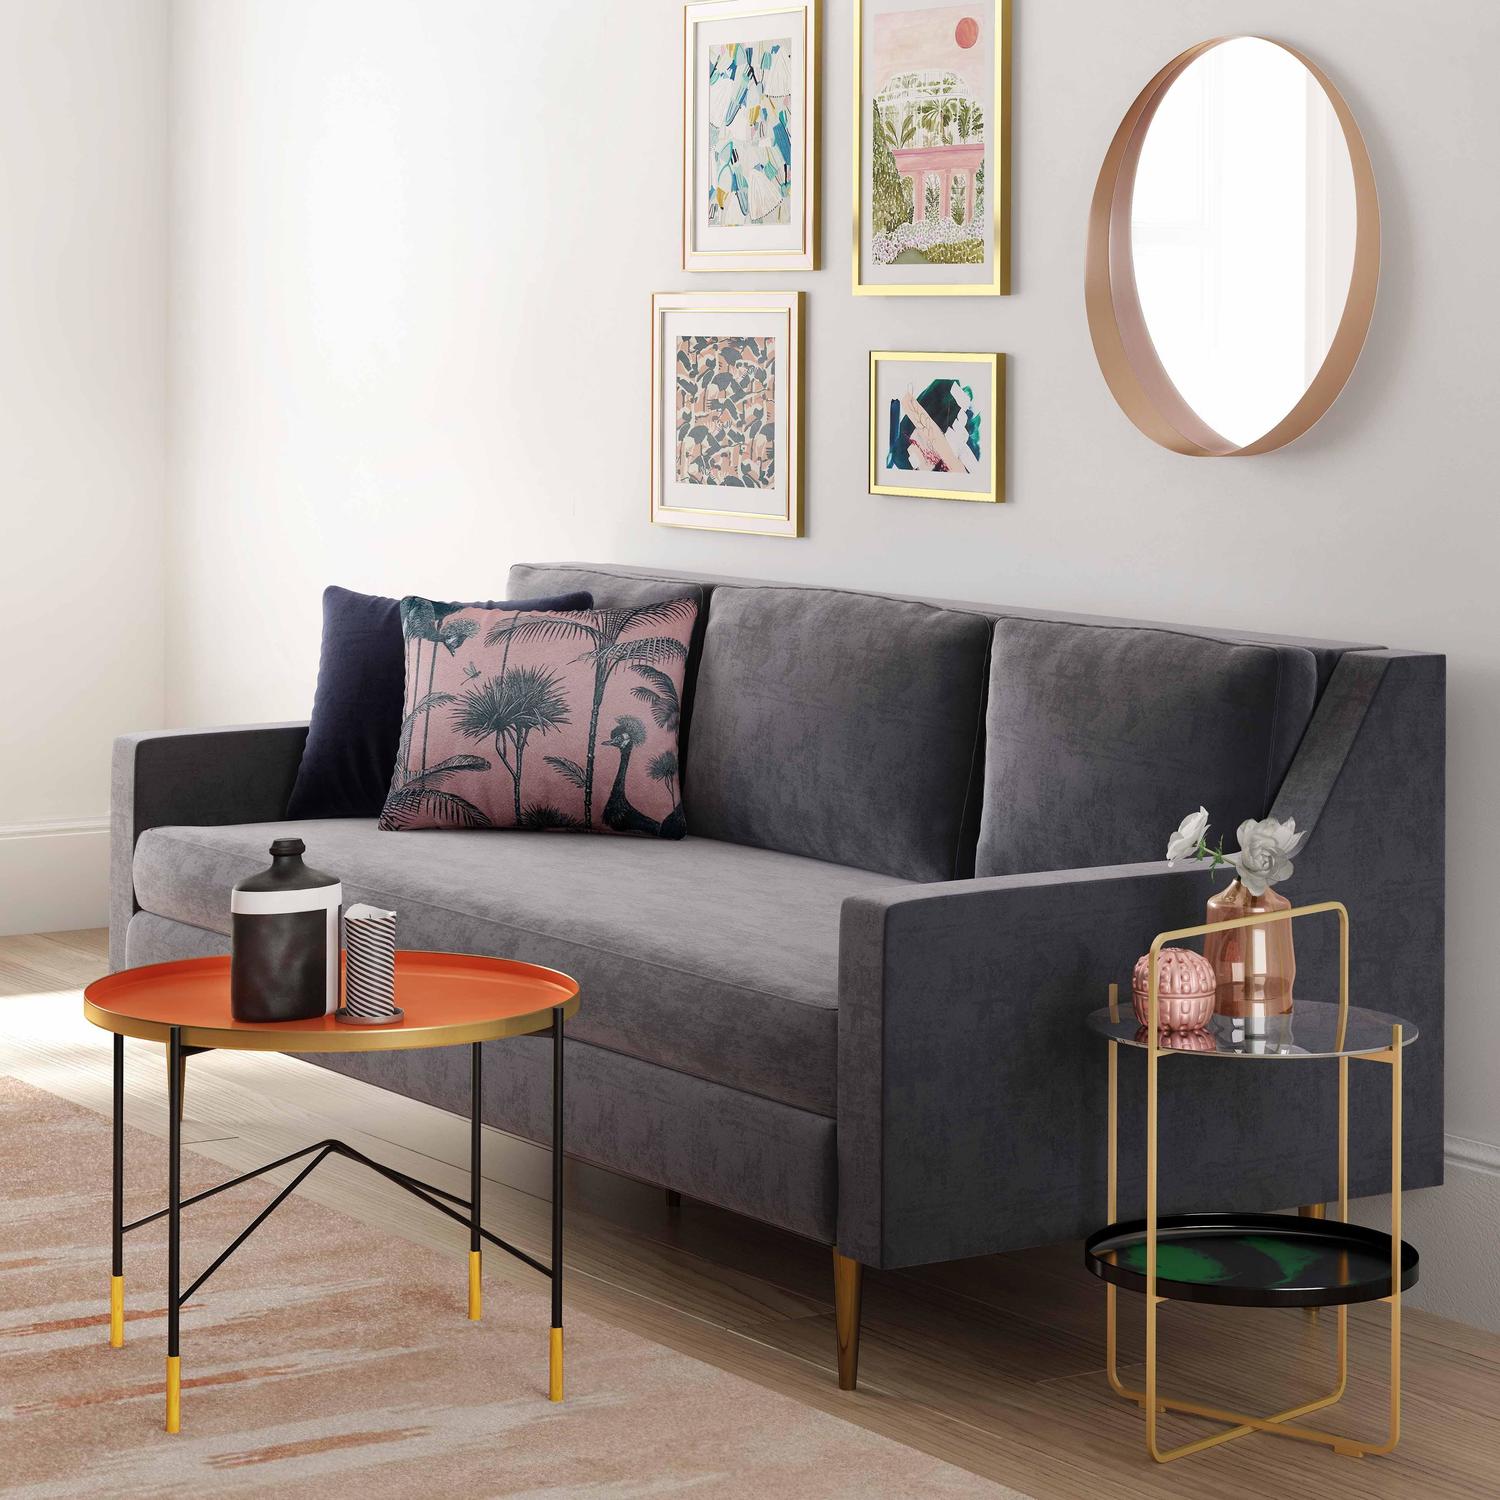 floor mirror modern Contemporary Design Furniture Mirrors Copper